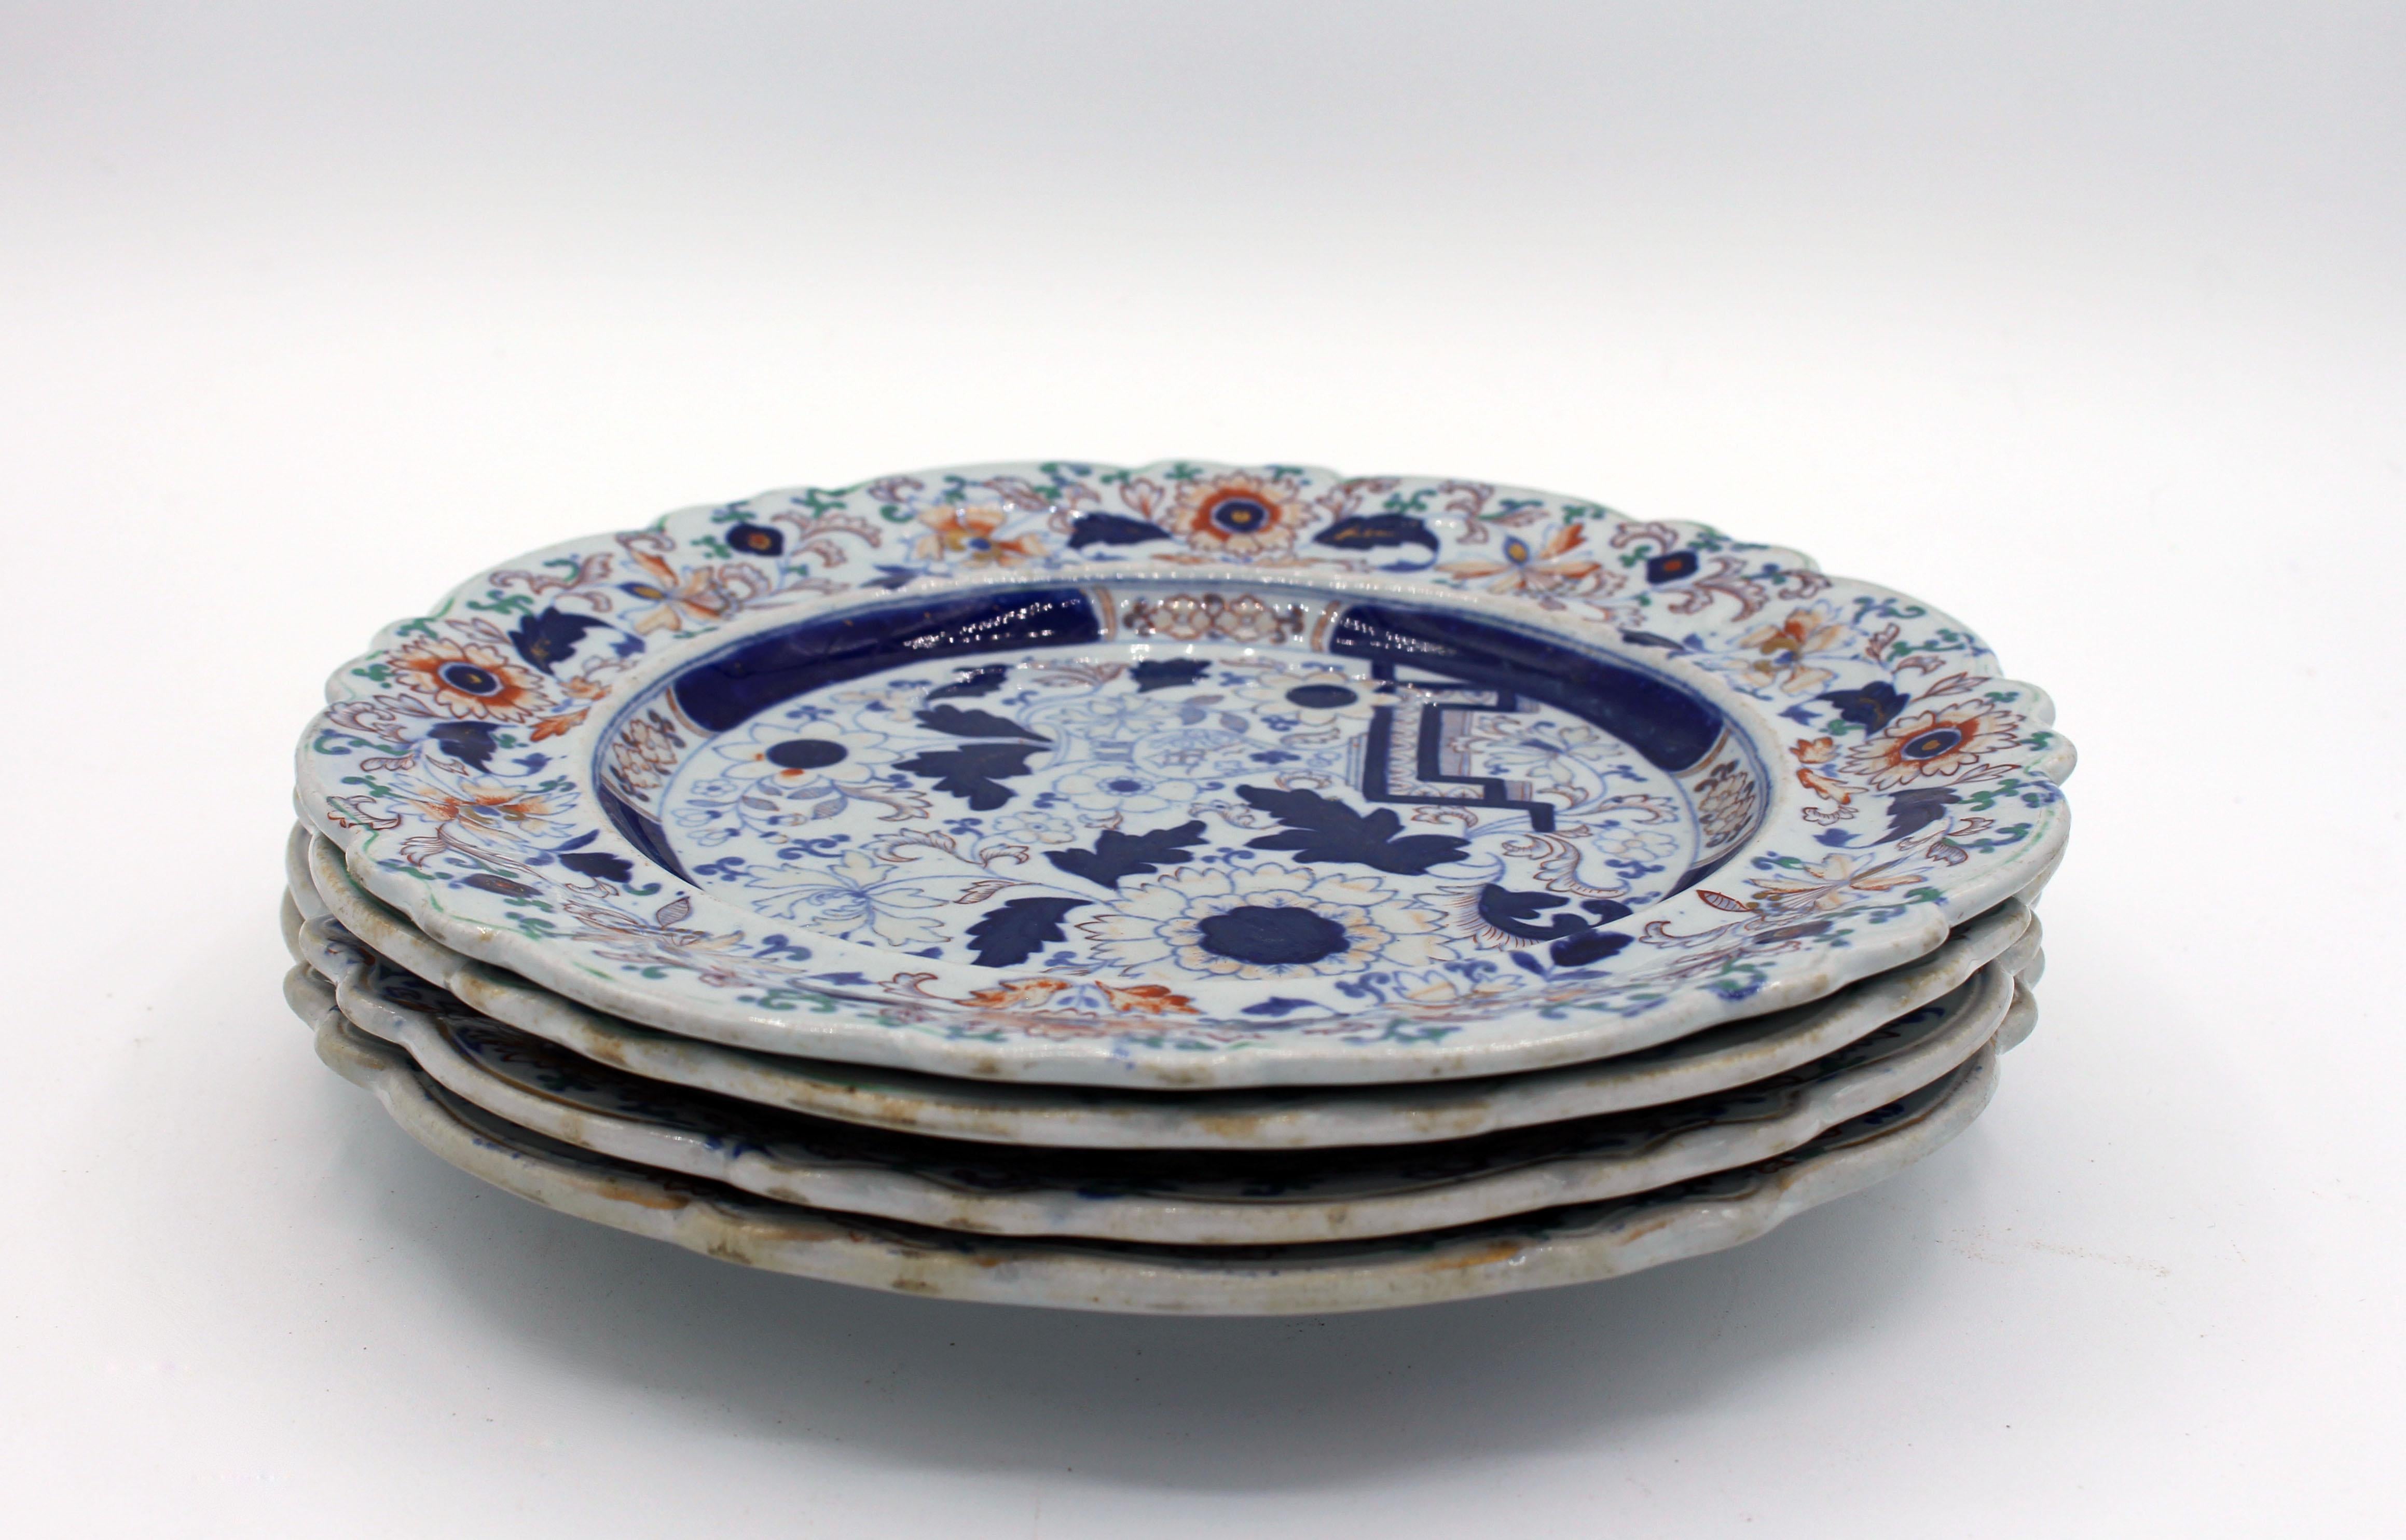 stone china plates